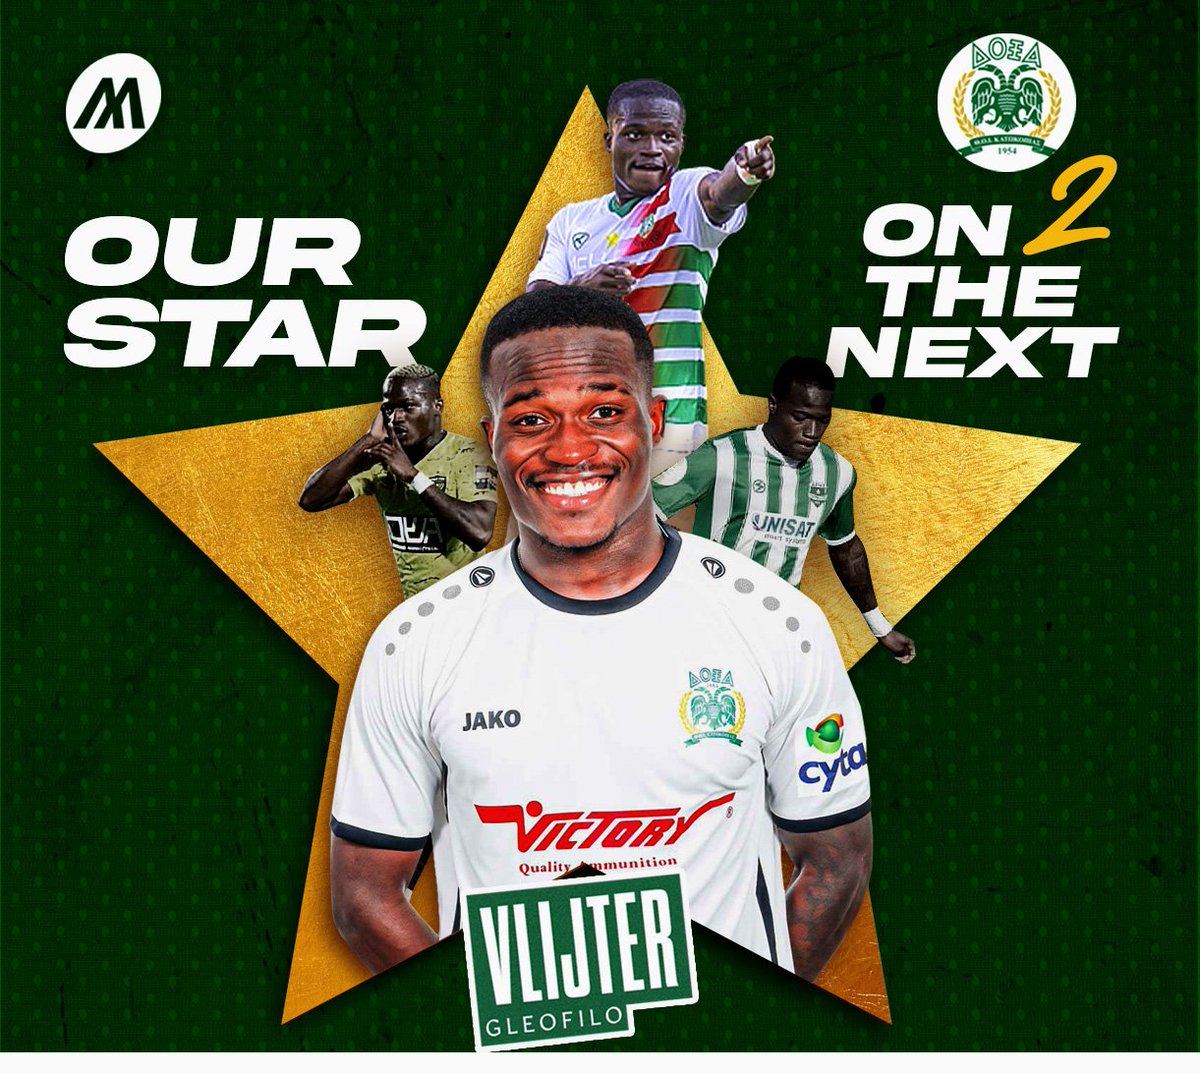 *Our star is on to the next! *
Congrats @GleofiloVlijter with the new club, @DOXAKatokopiasFC
 Did you know Gleofilo is a SV Robinhood SR  Alumni? 

@NatioSuriname
@InsideCaribFoot 
@Highlightsofsu 
@MvLsports

#doxafc
#motev23